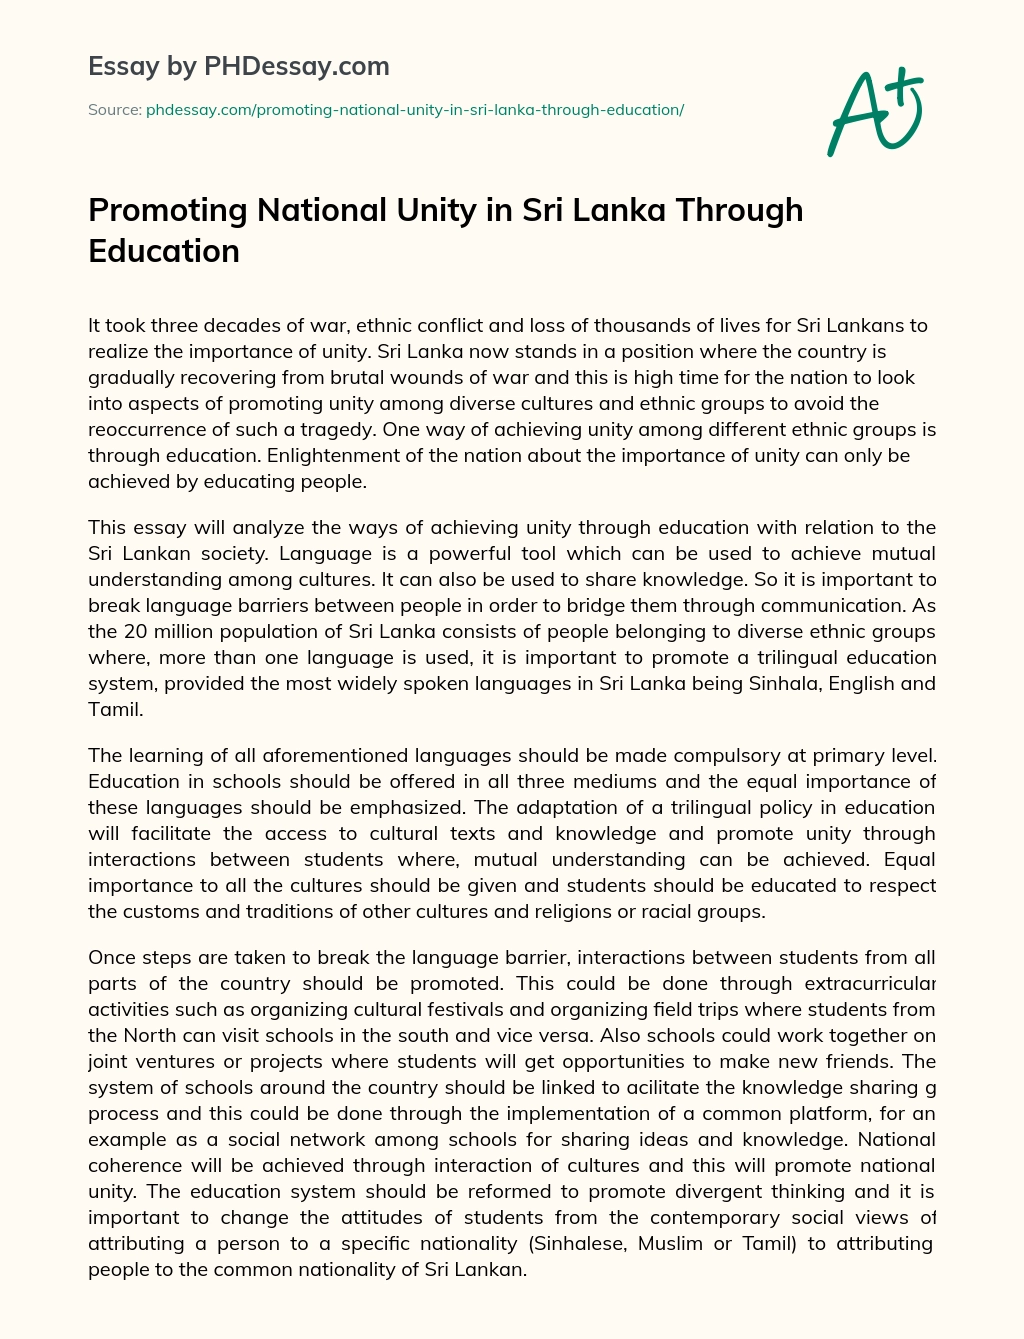 Promoting National Unity in Sri Lanka Through Education essay